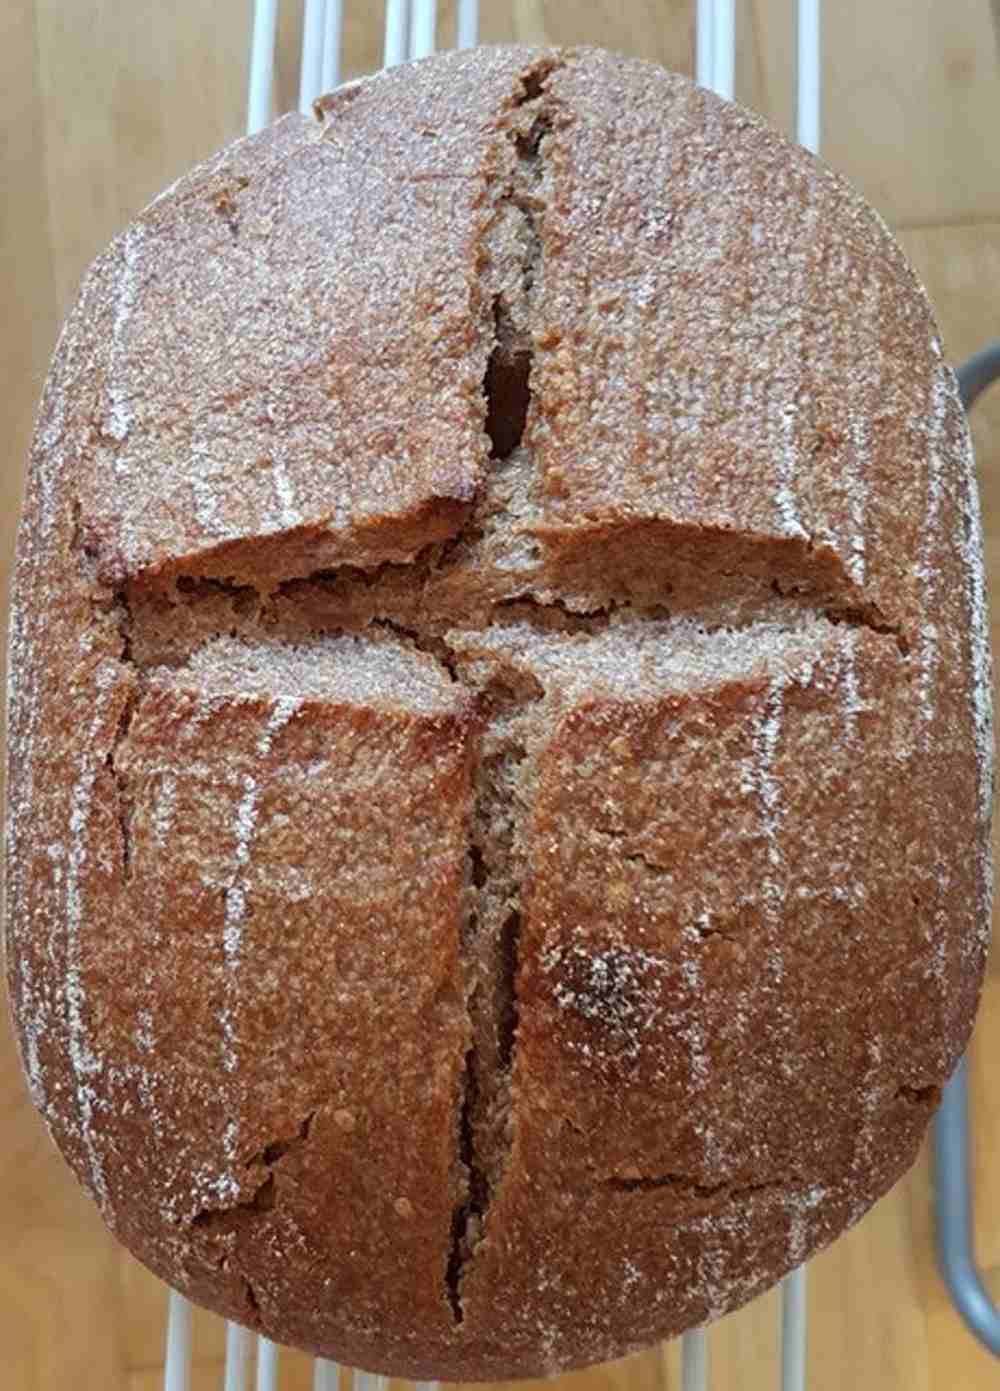 Emmer bread. Image credit: Michael Scott, UCL Genetics Institute, Author provided